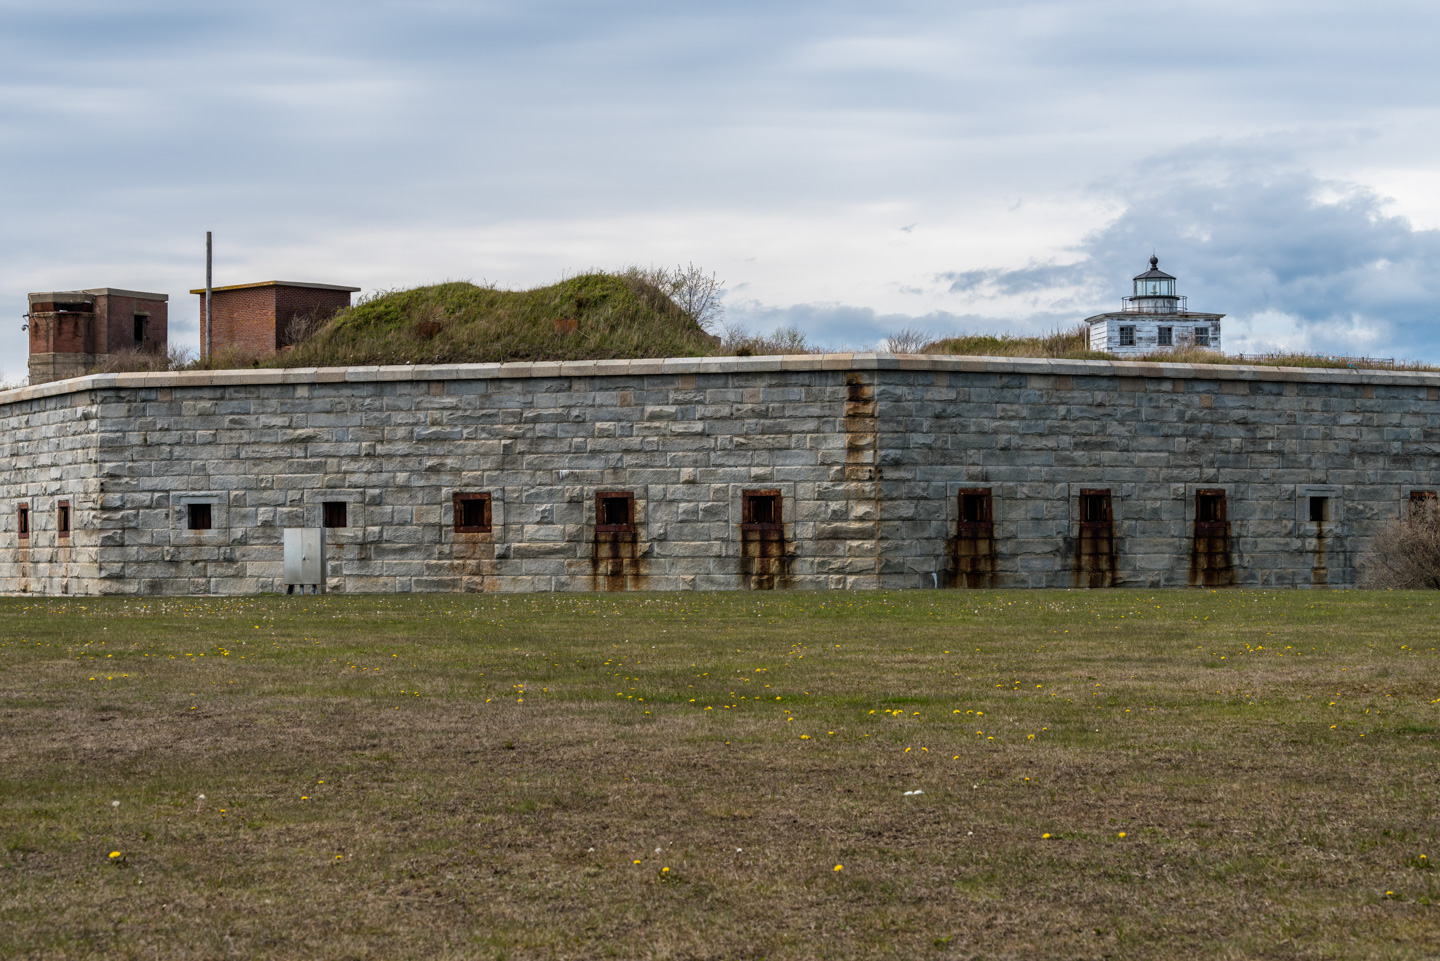 Fort Rodman